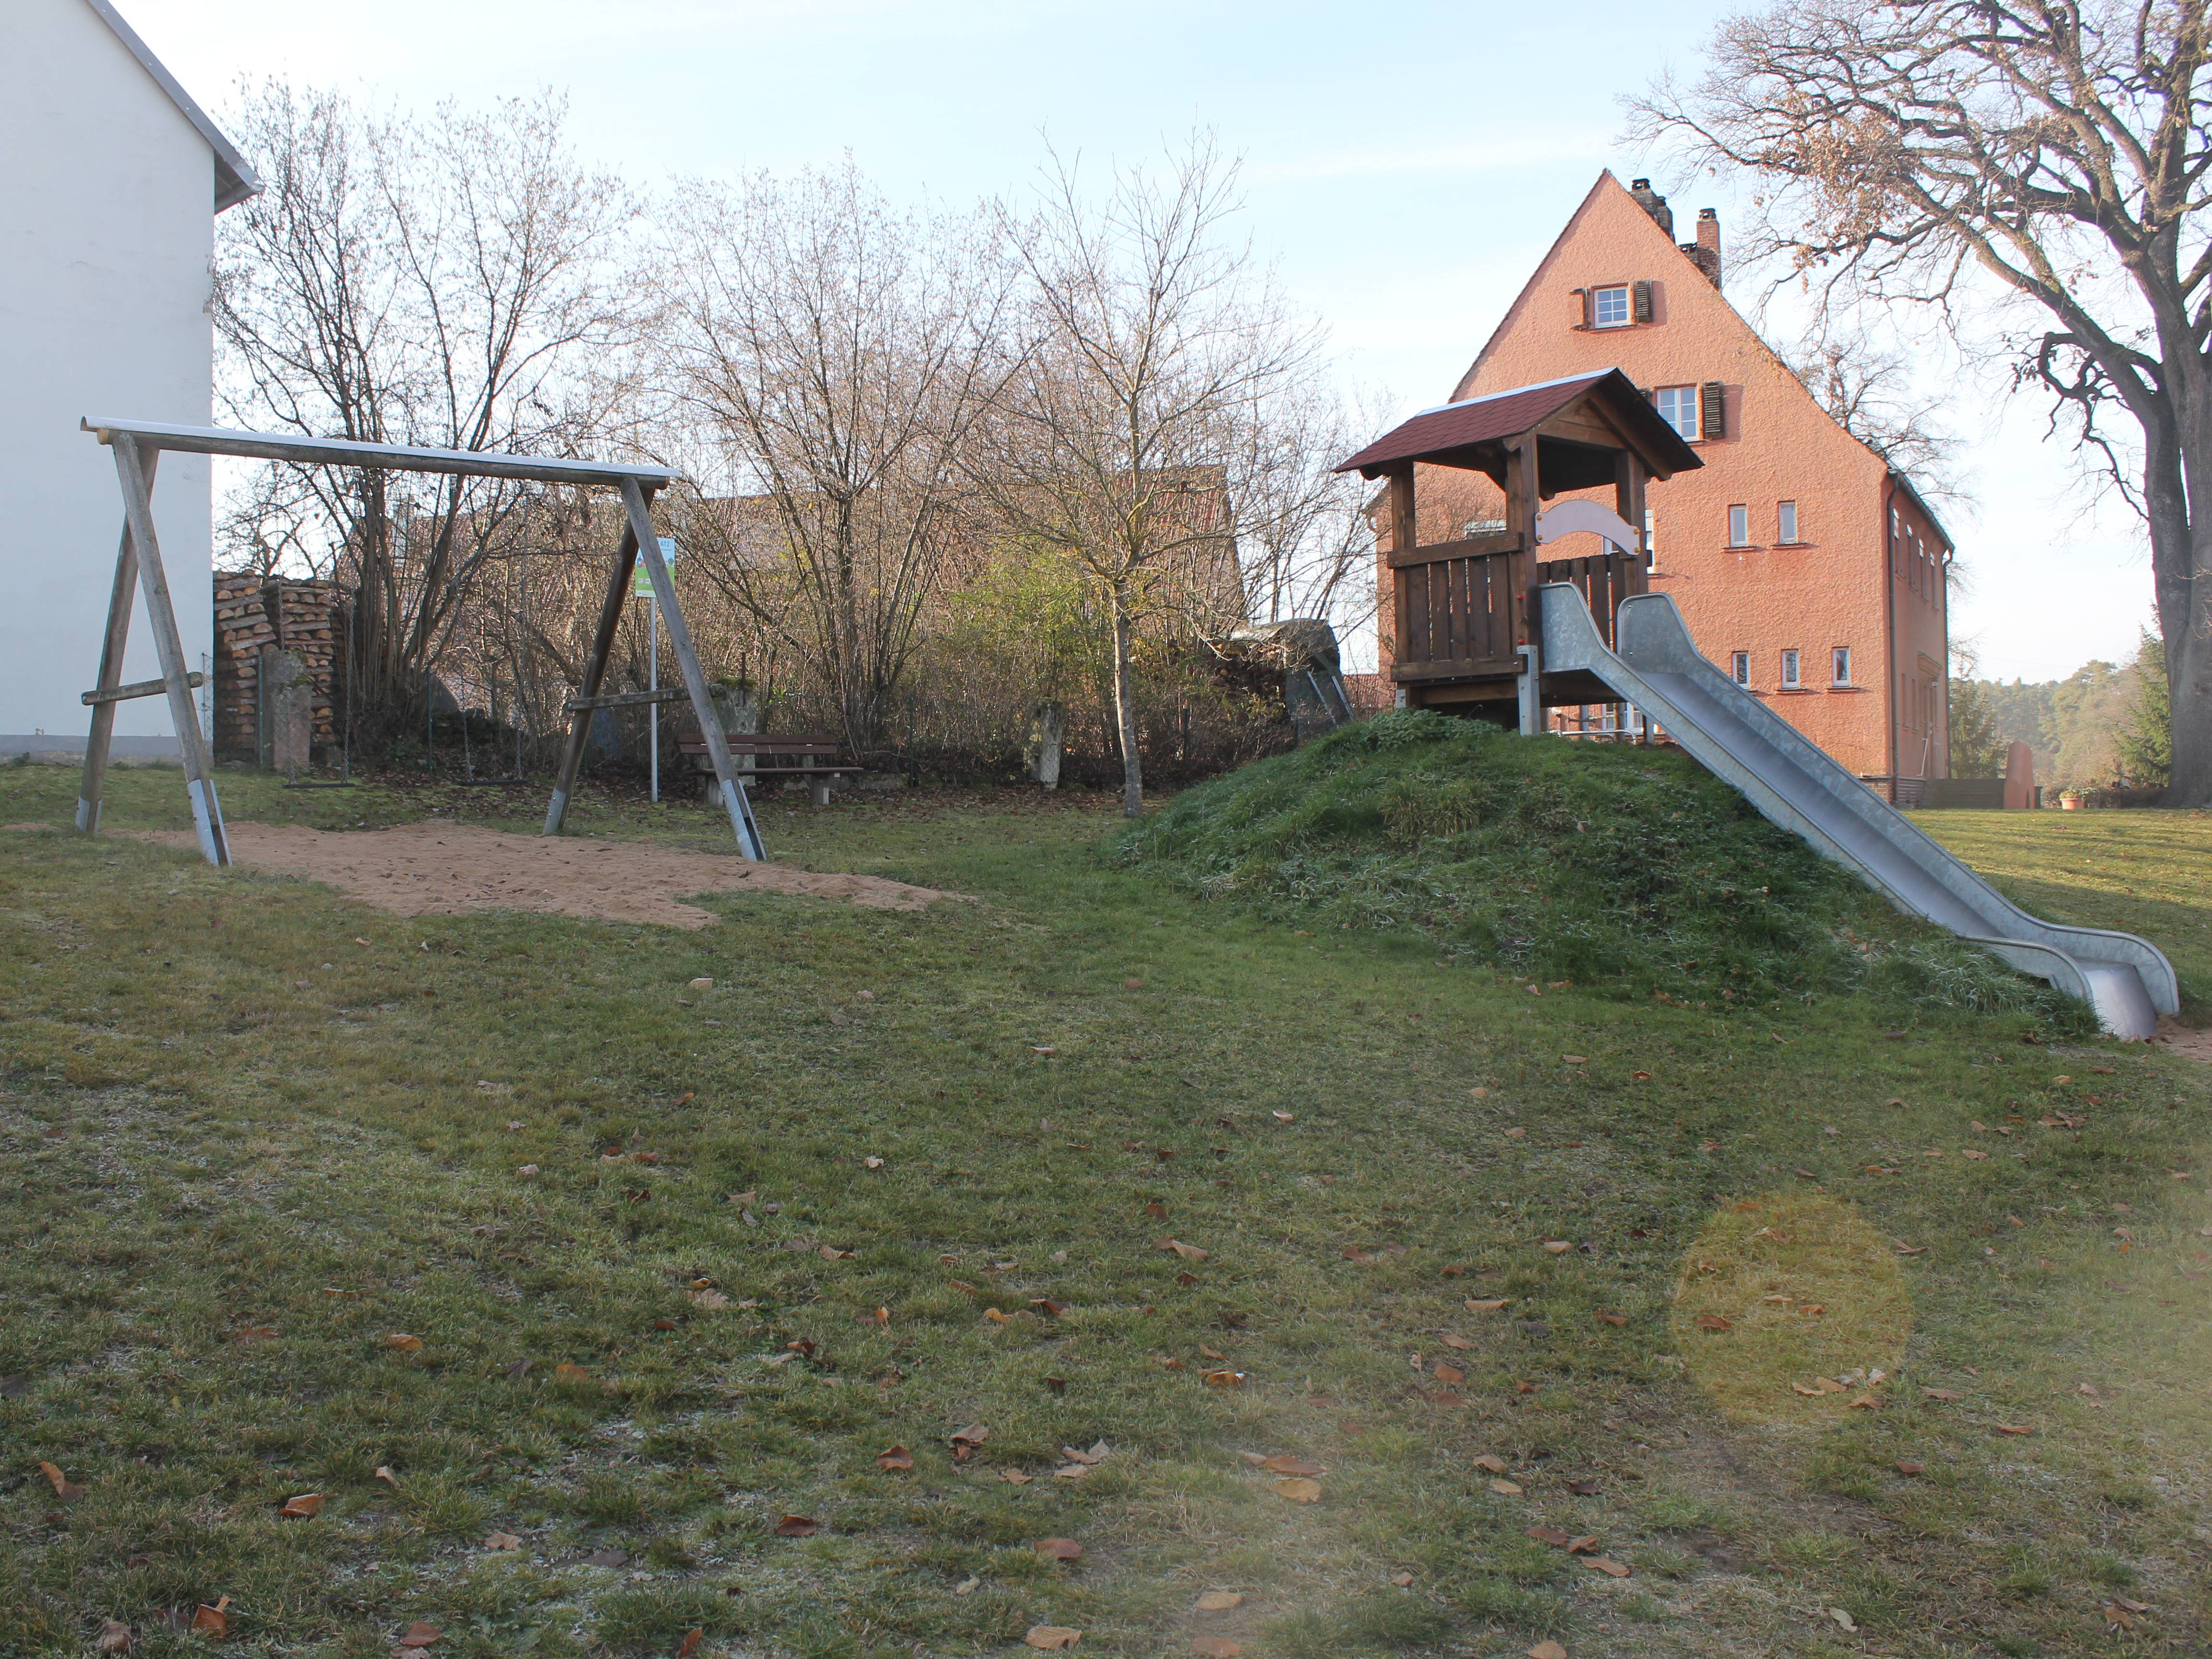  Spielplatz in Tennenlohe, Am Kirchenespan 